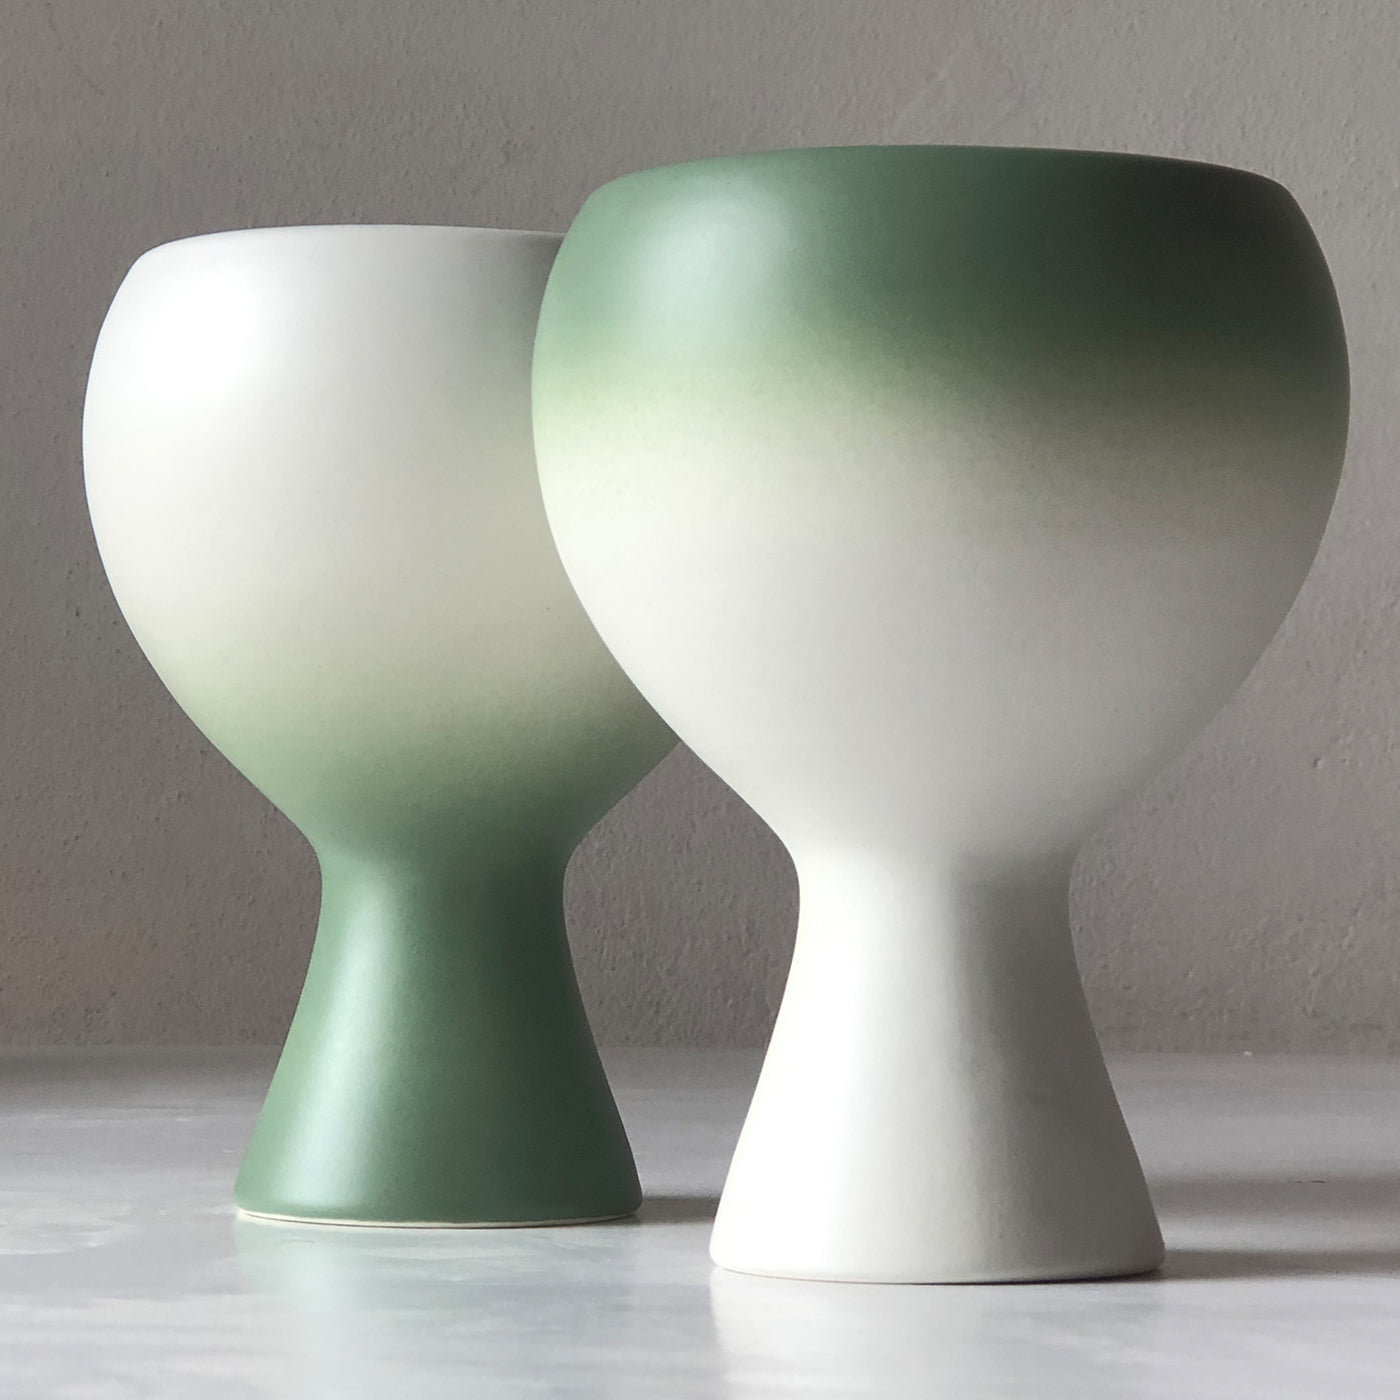 Inseparabili Green Set of 2 Cups - Alternative view 4